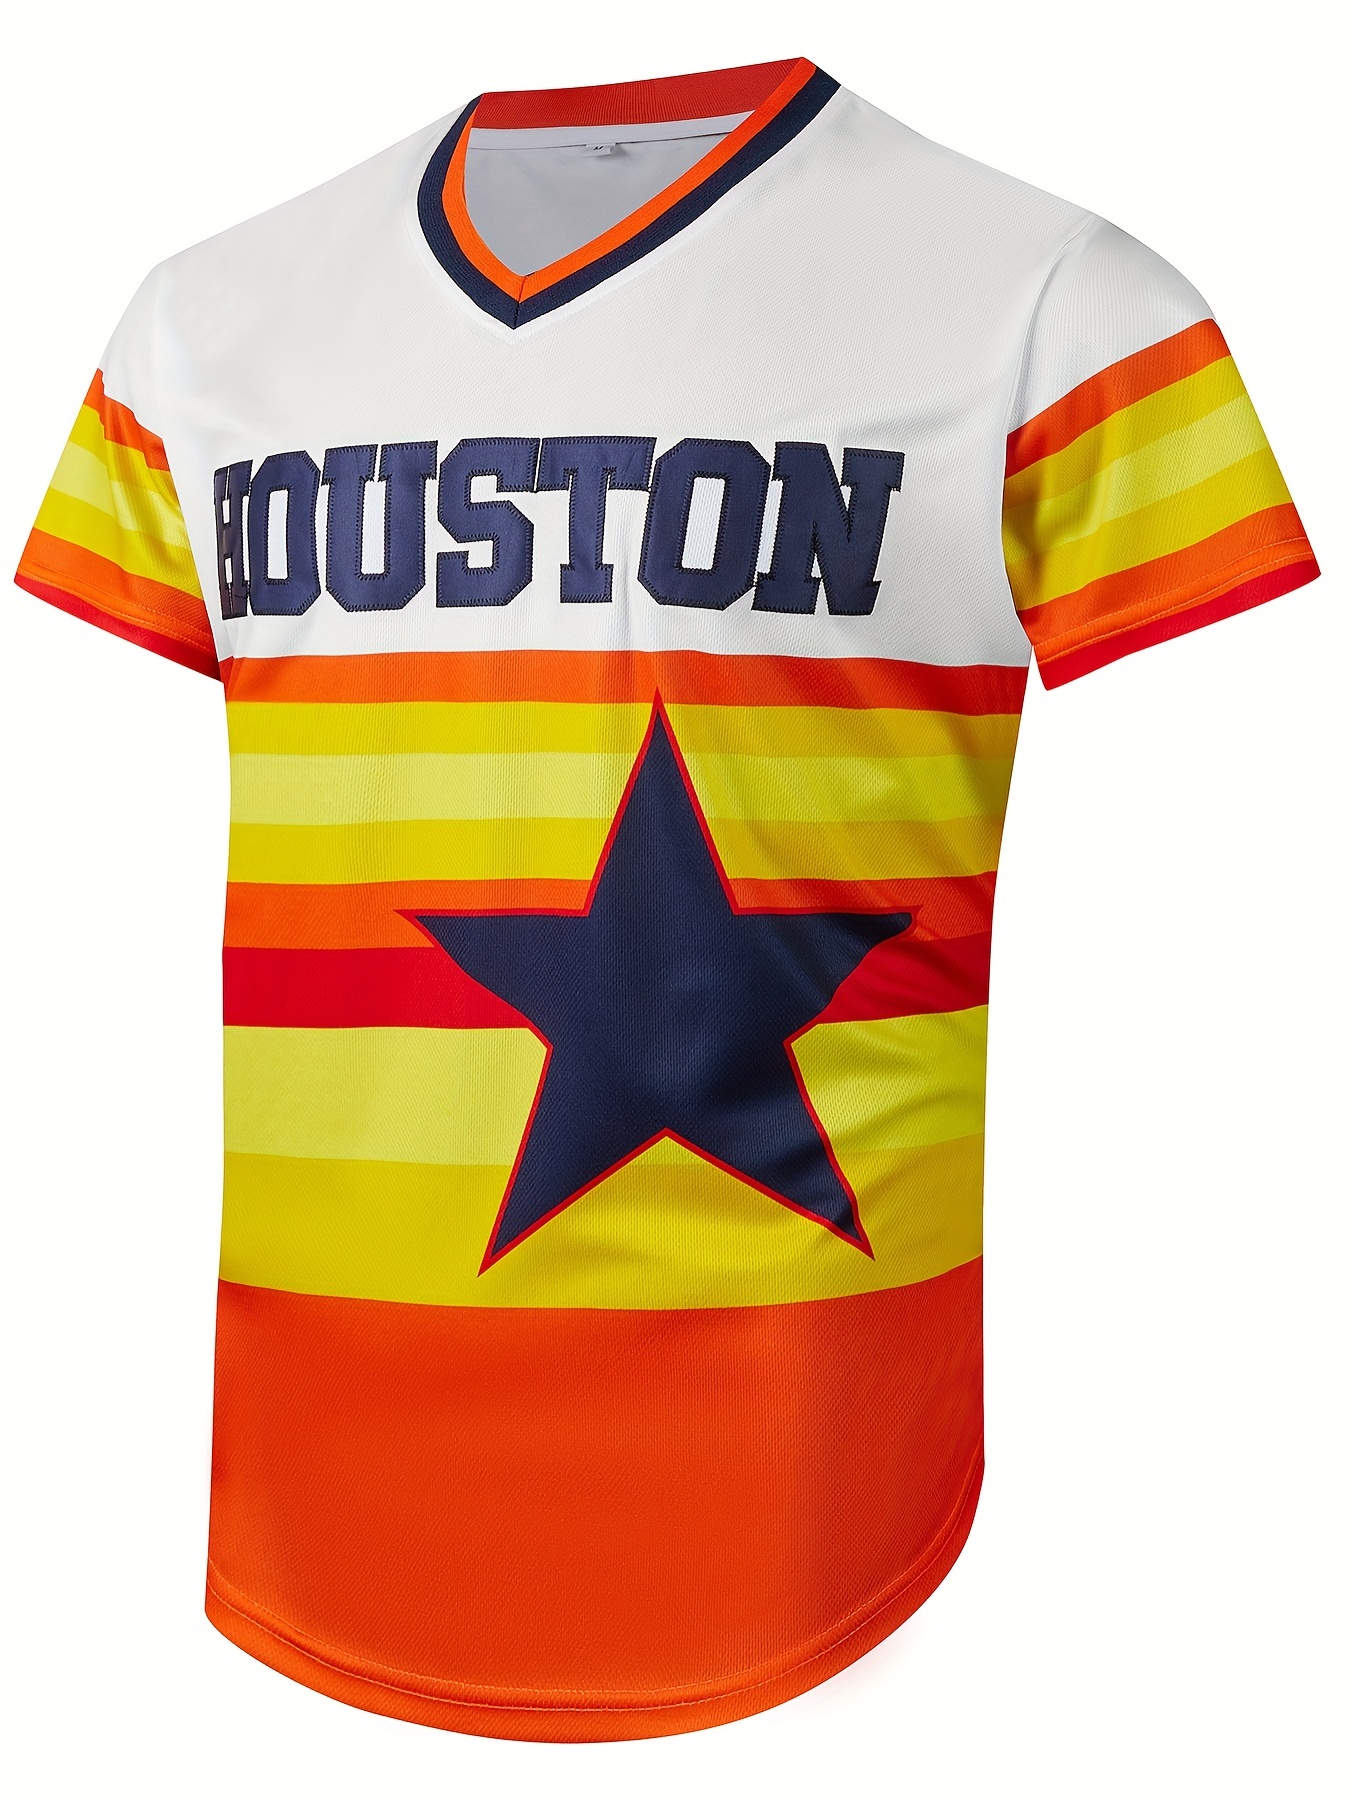 Mens Houston 34 Baseball Jersey Retro Classic Baseball Shirt